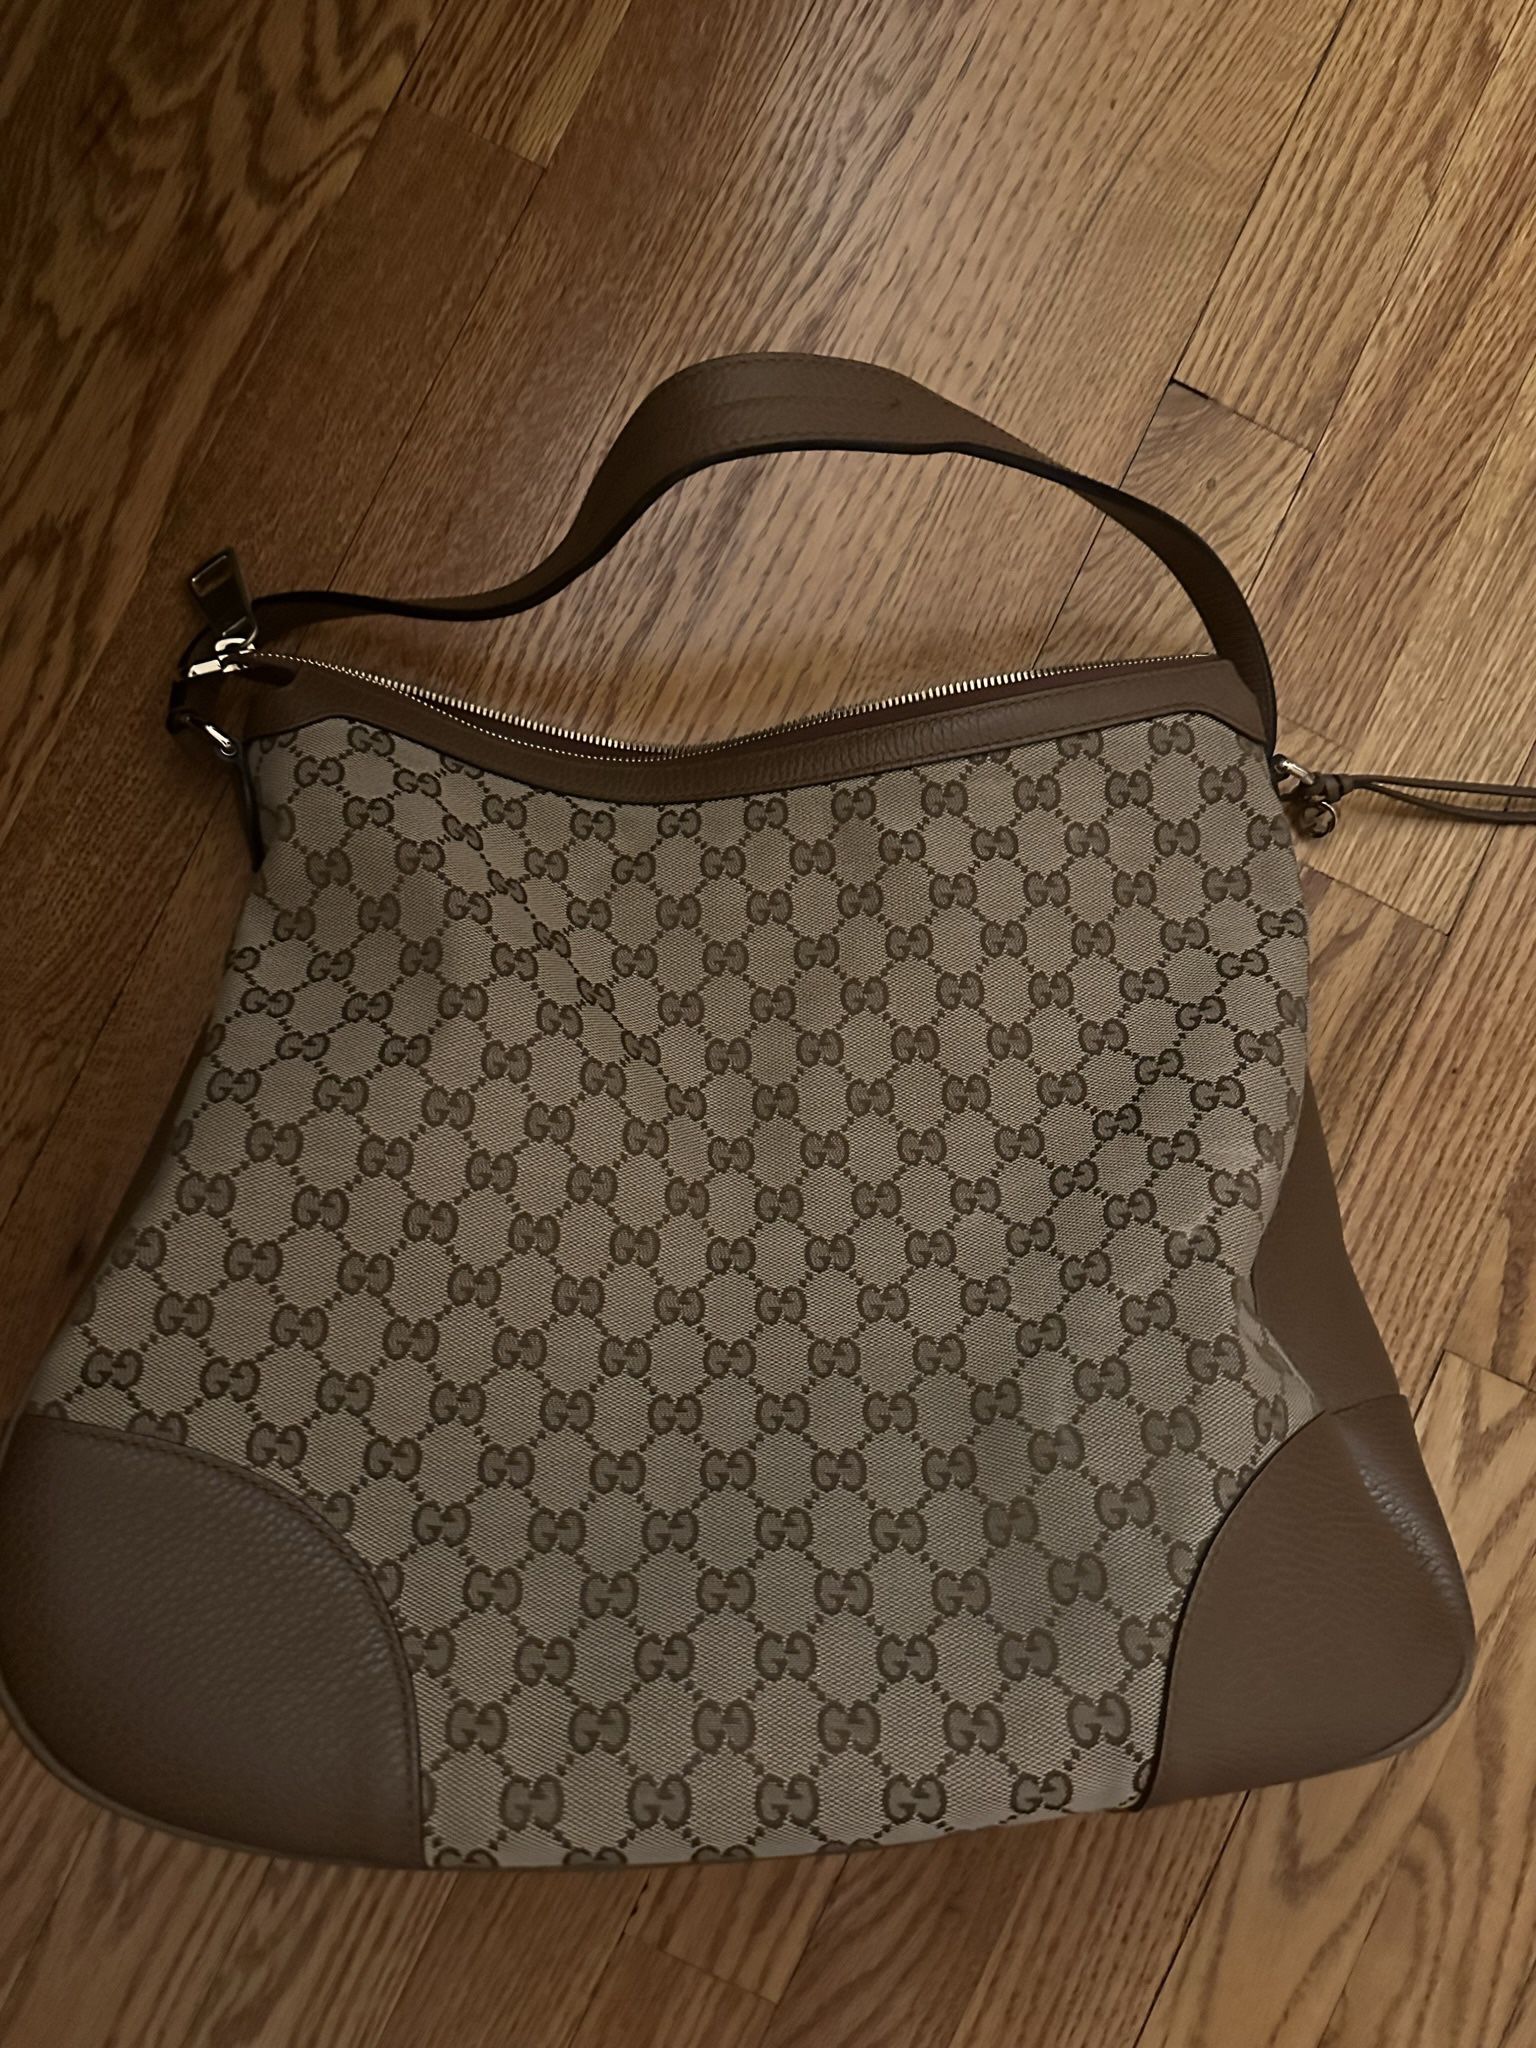 Gucci Women’s Handbag